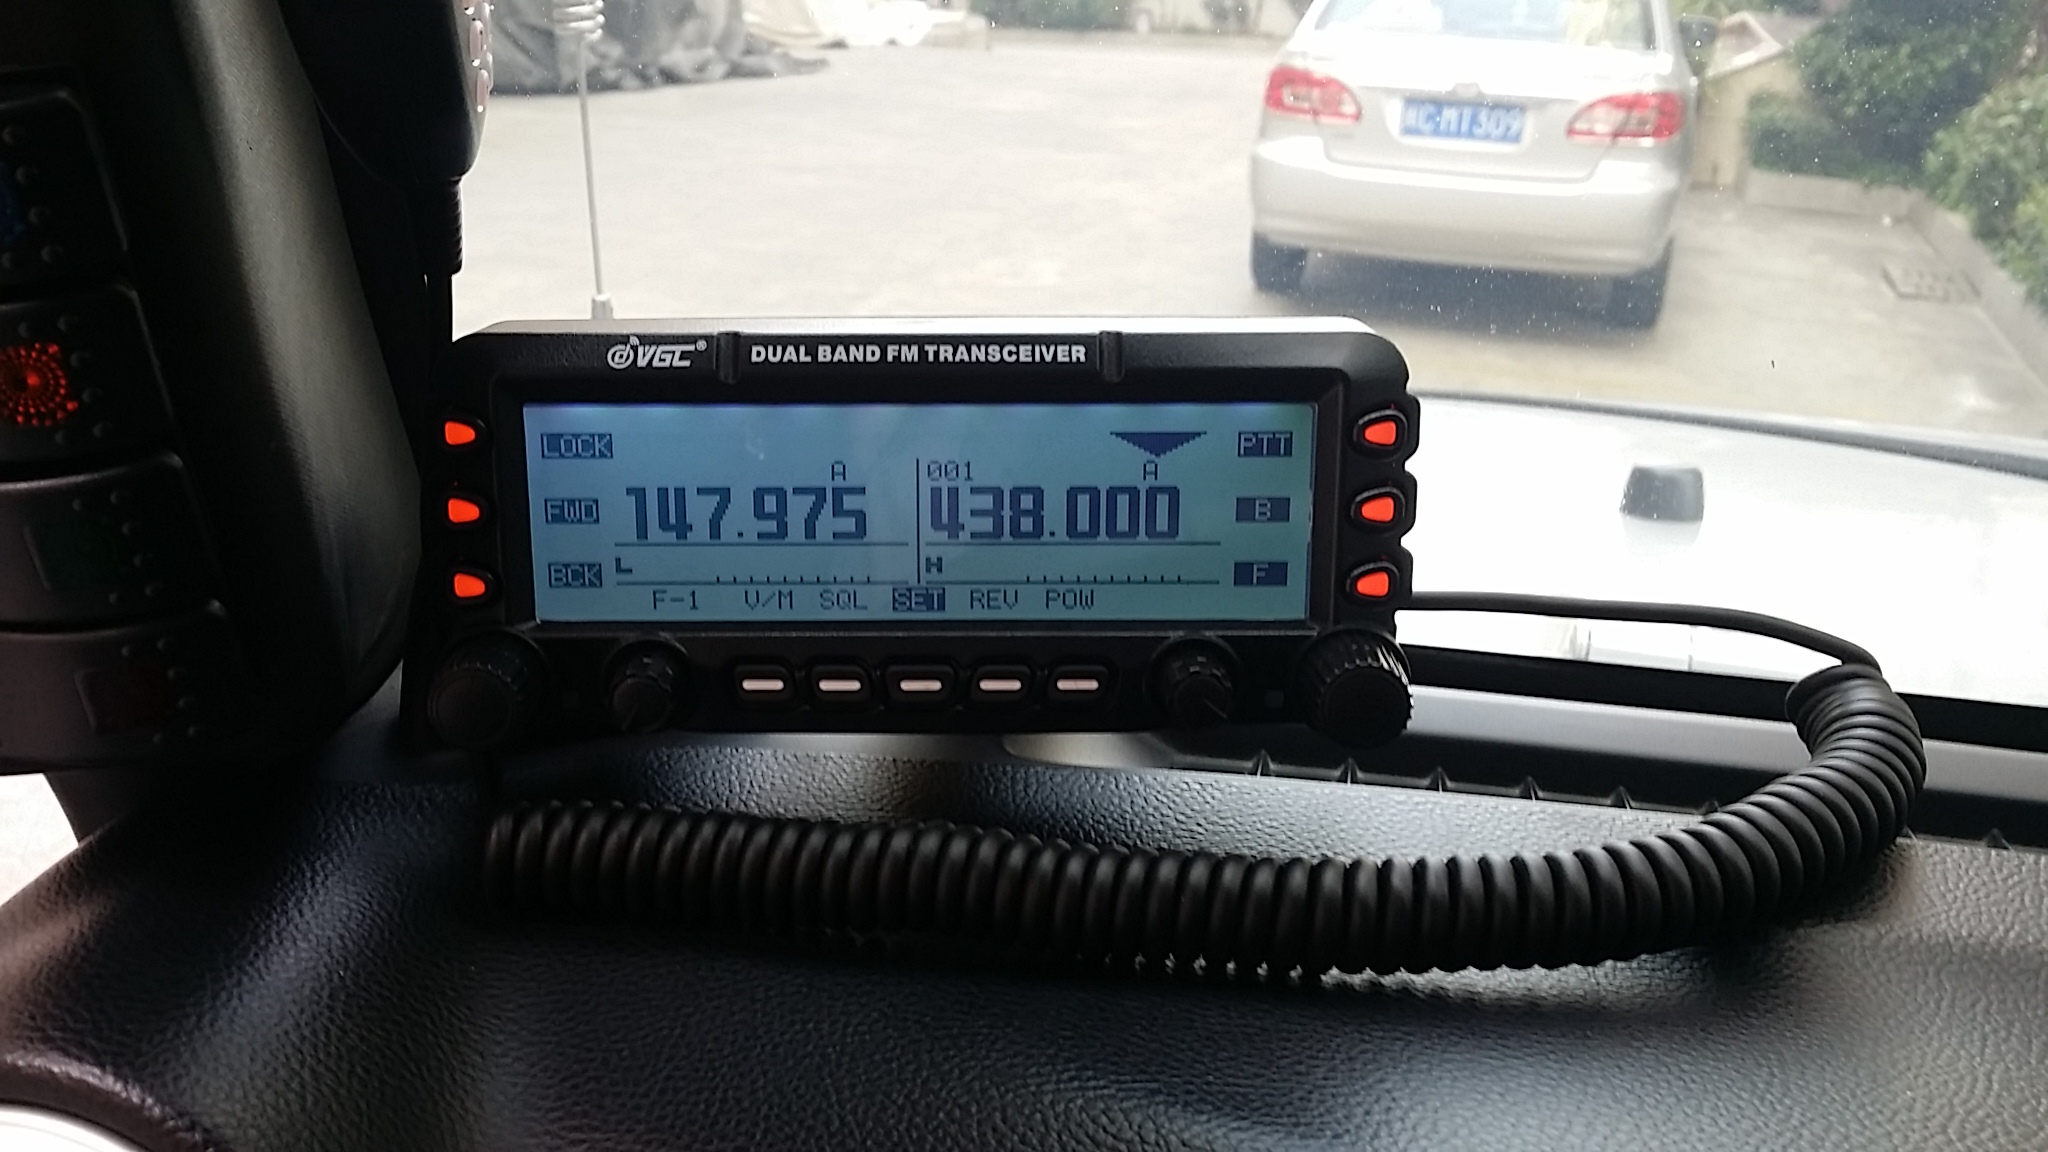 VR-6600PRO Mobile Radio